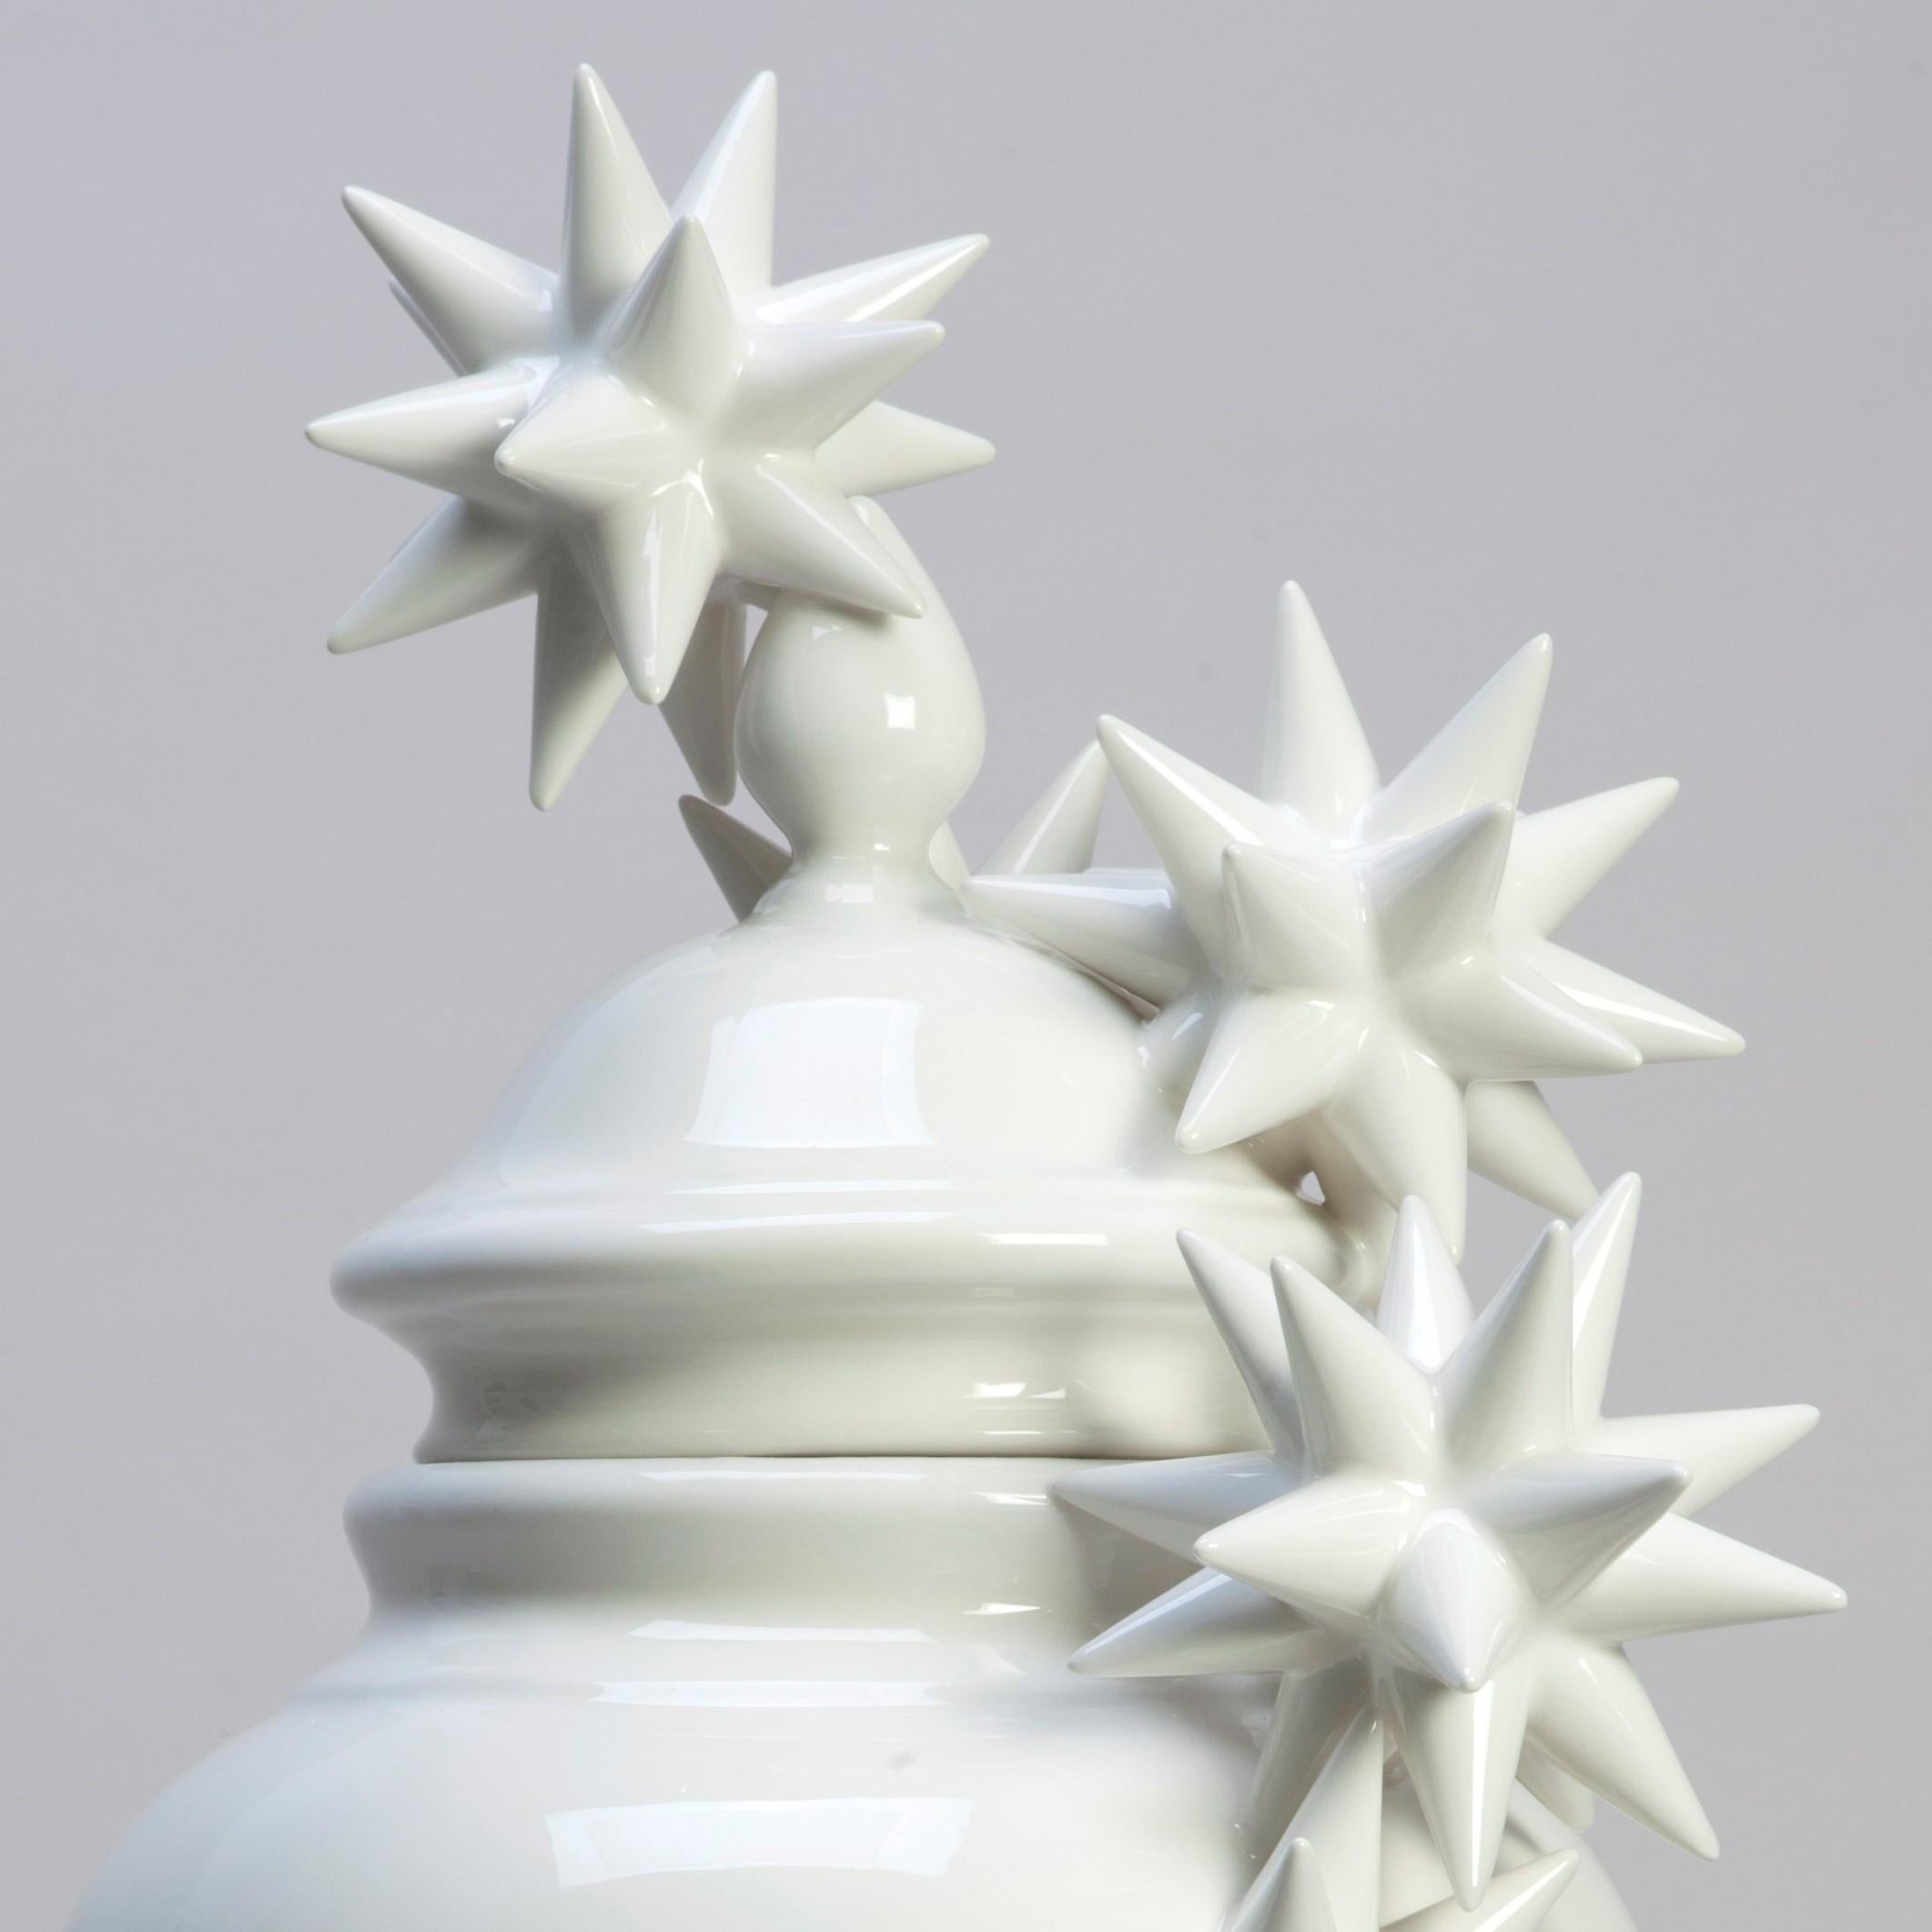 Glazed Large White Ceramic vase by Andrea Salvatori 21st Century Contemporary For Sale